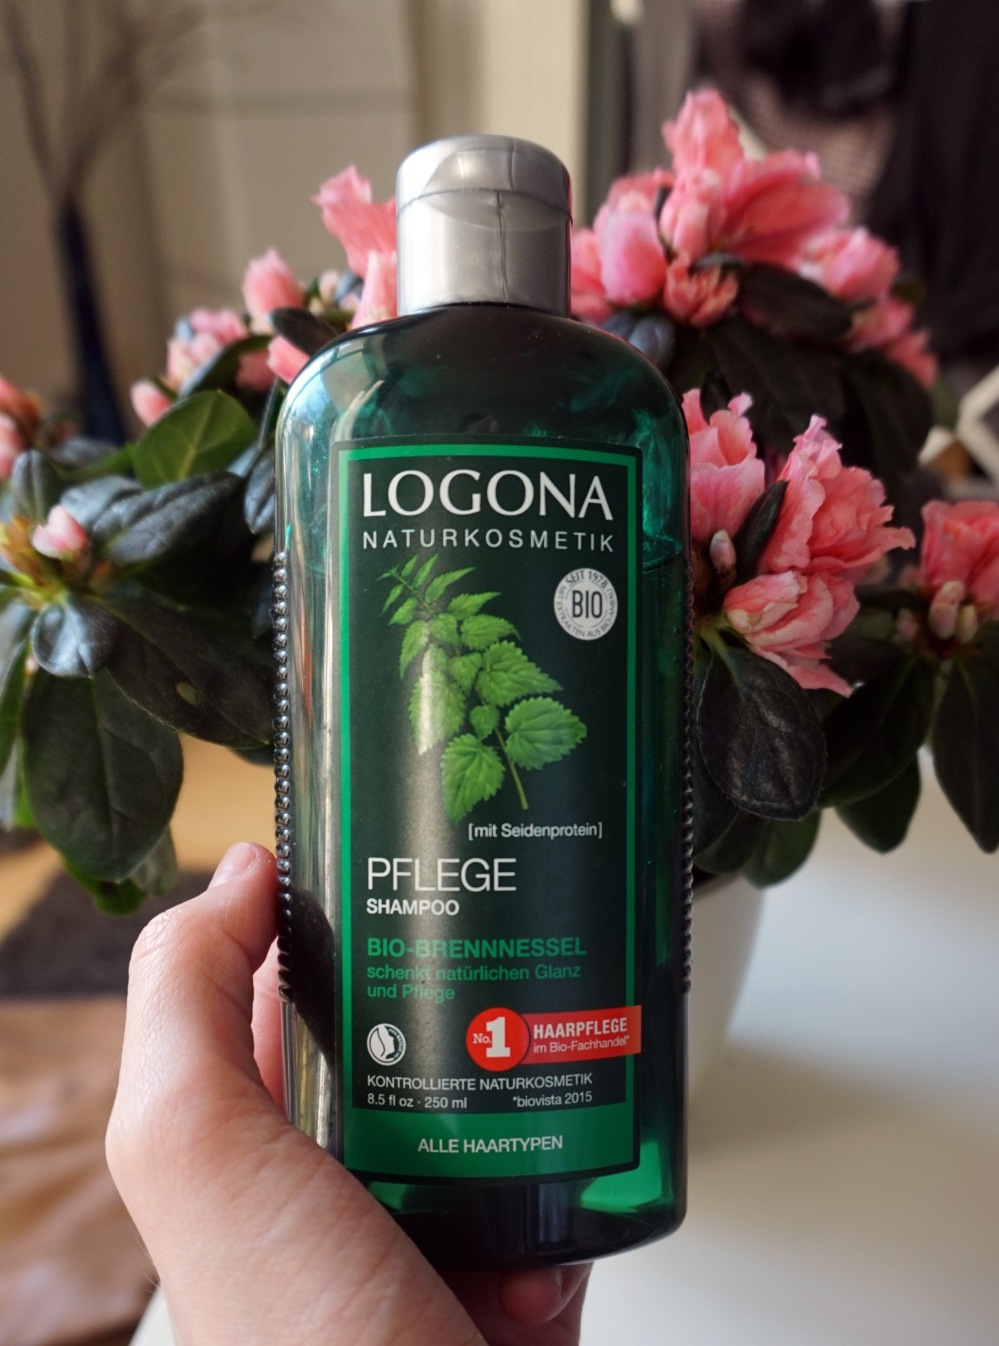 – hair shampoo care NATURE Logona – Review: FOR GOOD